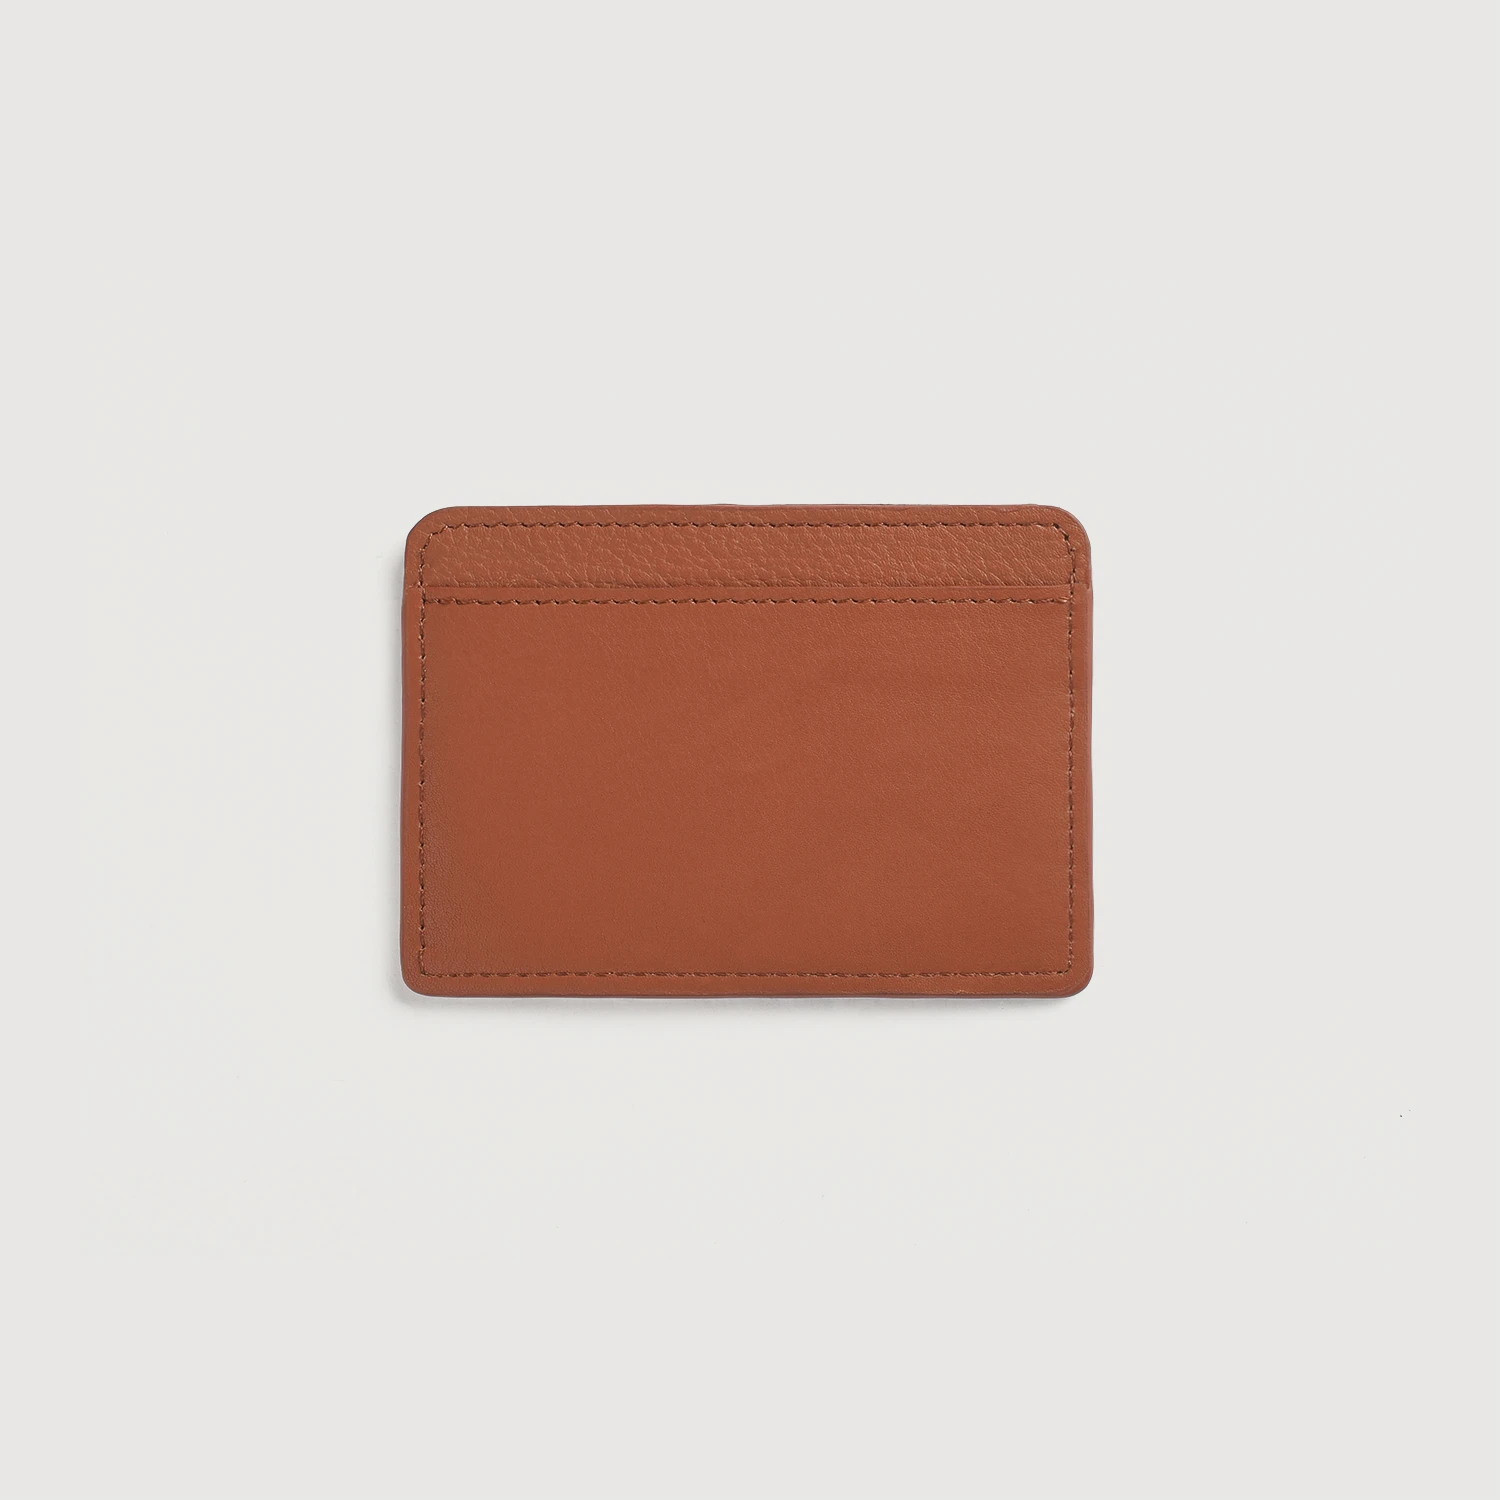 Karl Brown Leather Card Holder
